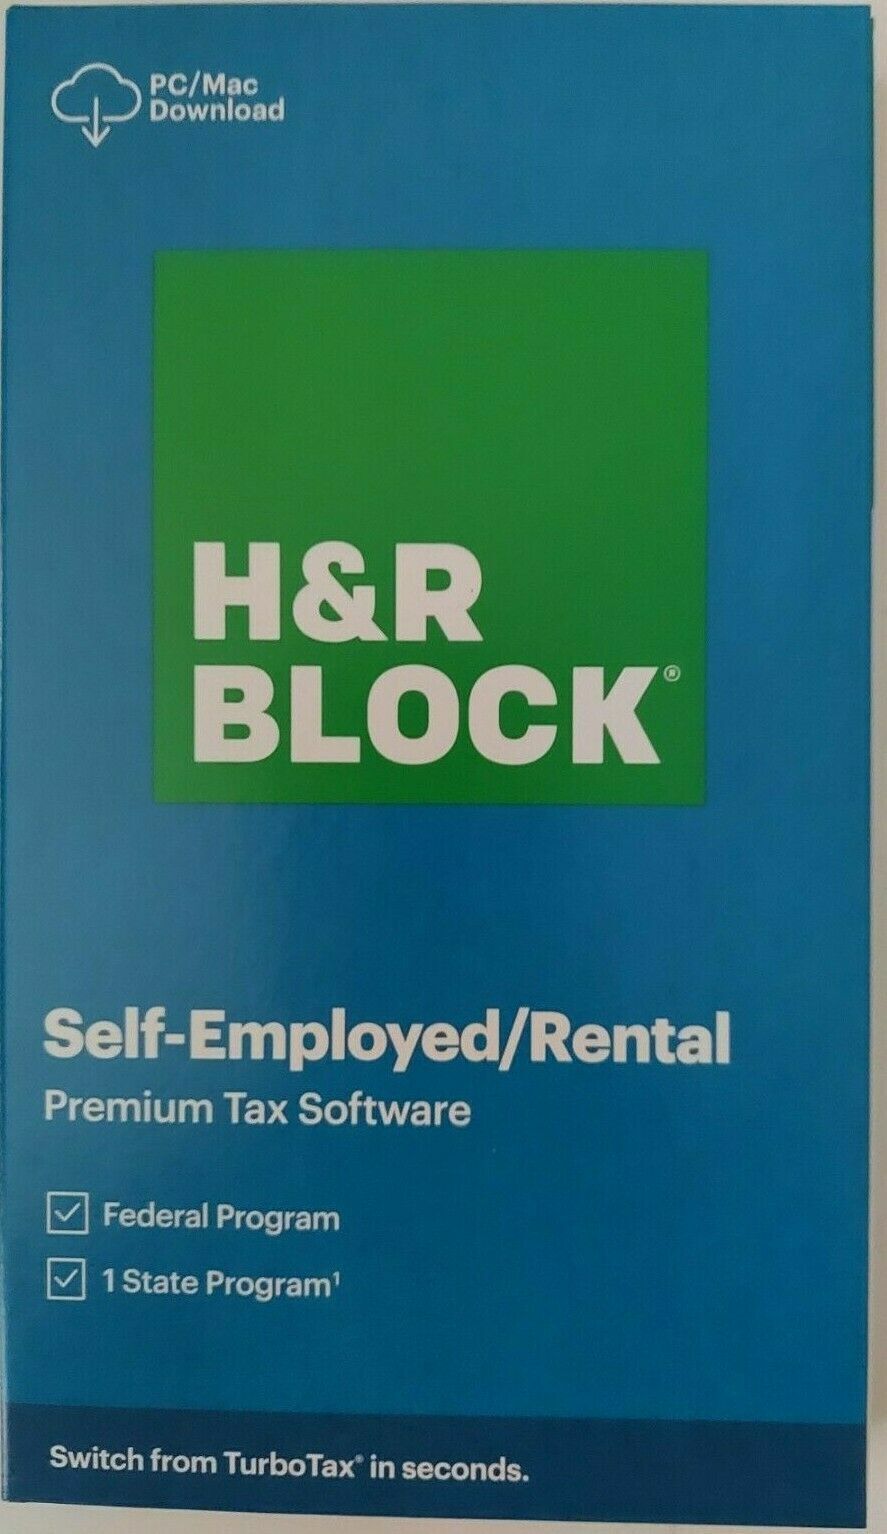 H&R BLOCK Tax Software Premium 2020 SELF Employed Rental PC Windows/Mac  